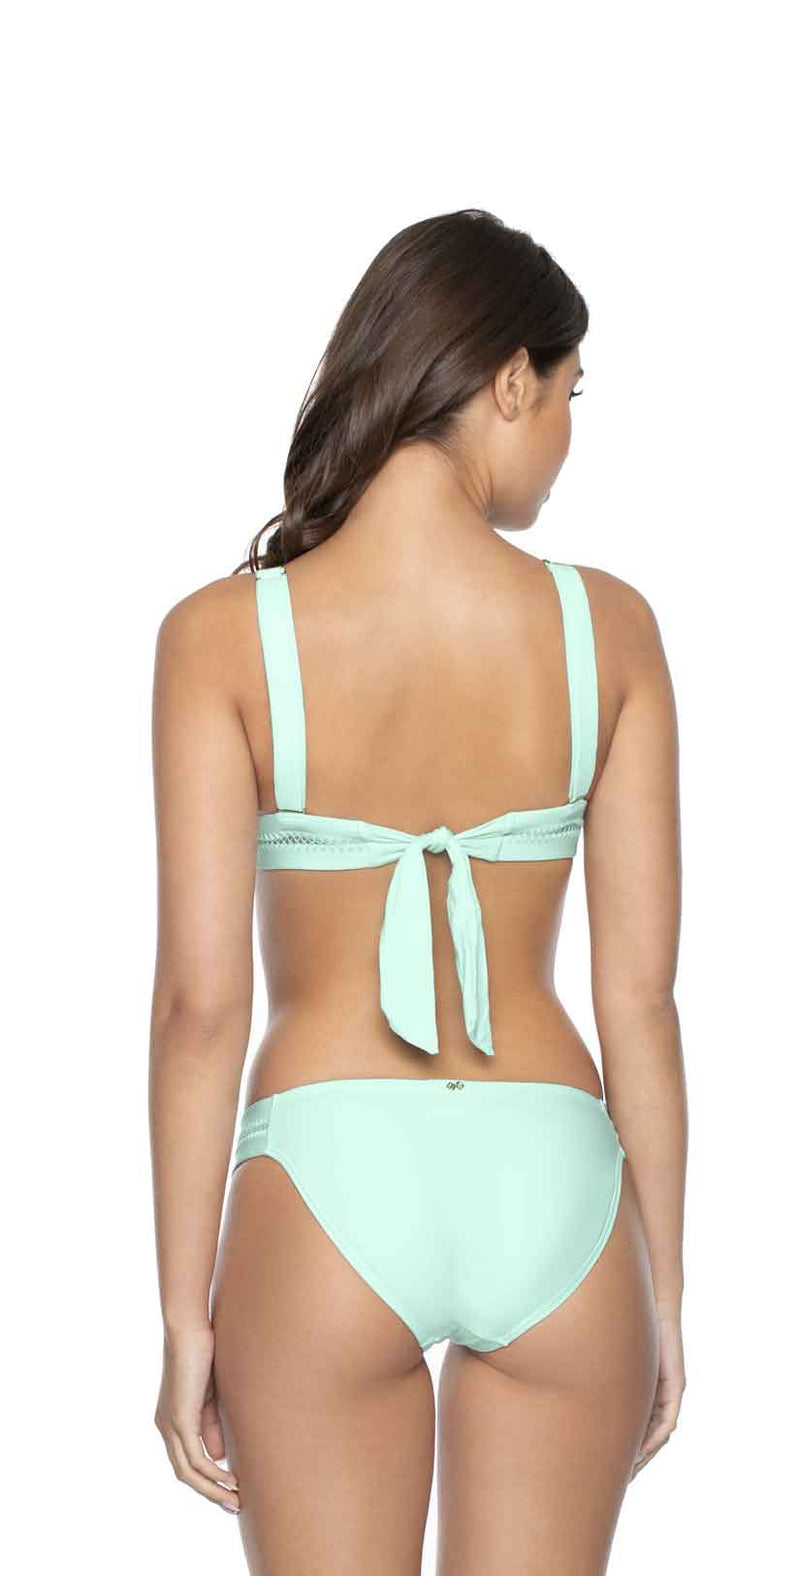 South Beach Swimsuits PilyQ Smocked Ruffle Bandeau Bikini Top in Sky Blue –  South Beach Swimsuits